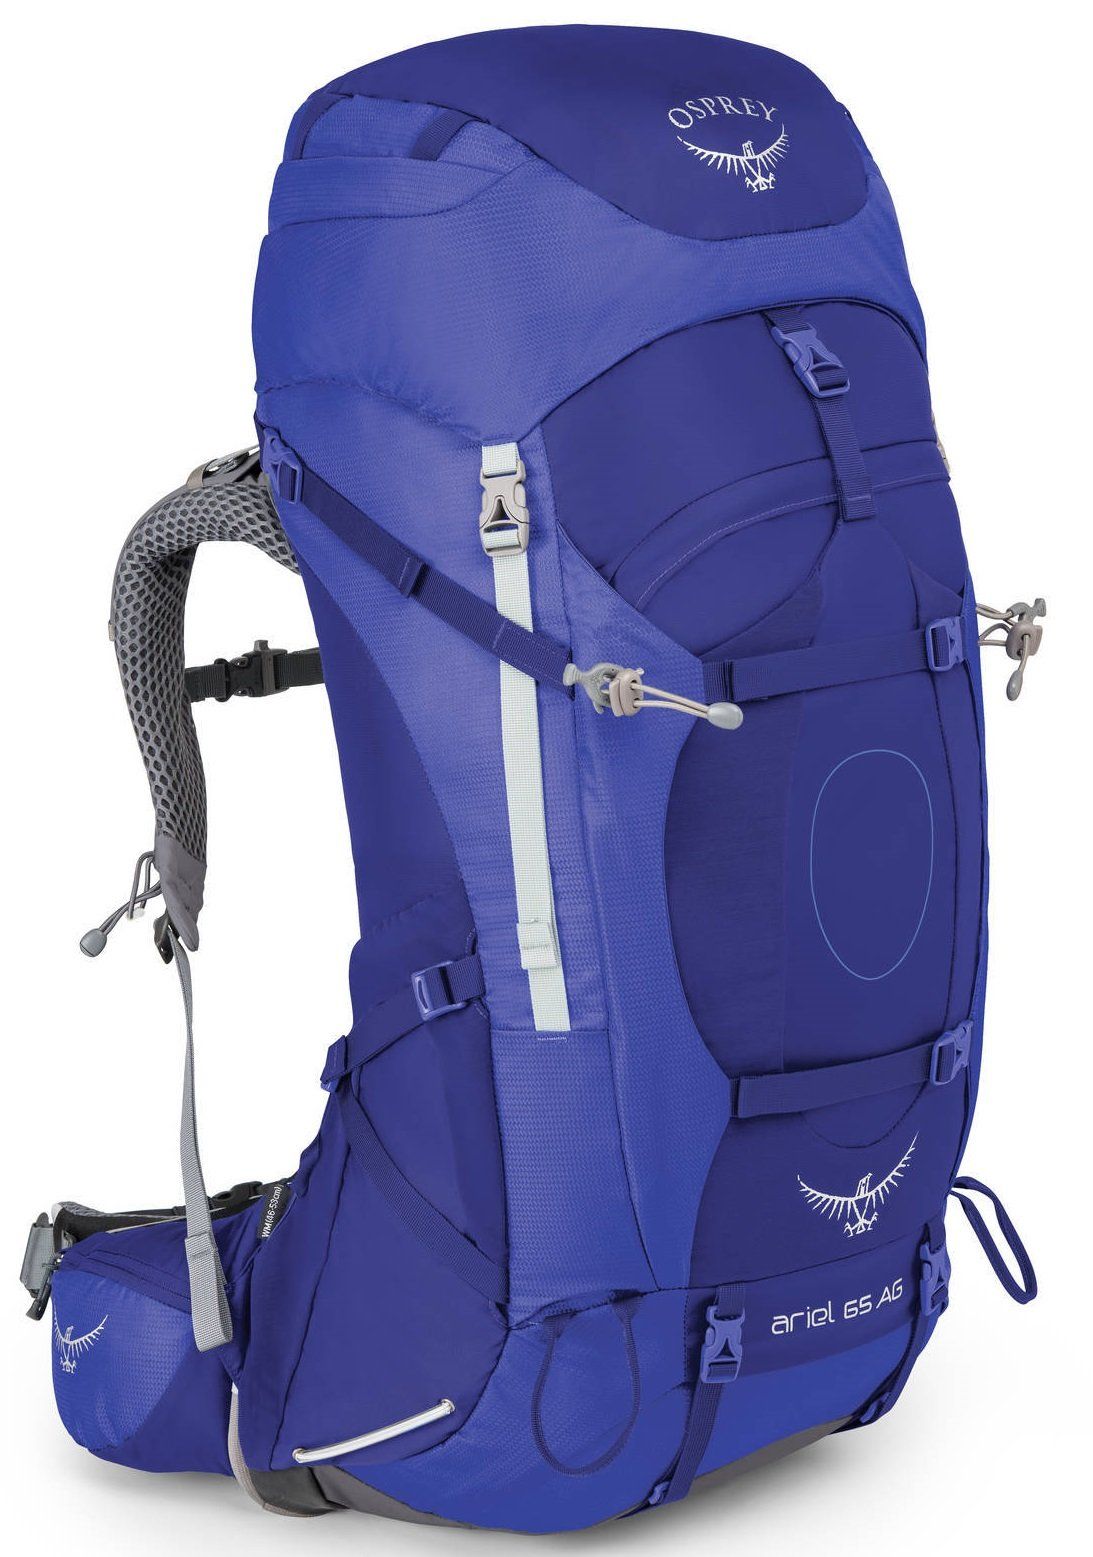 Osprey - Рюкзак прочный Ariel AG 65 M